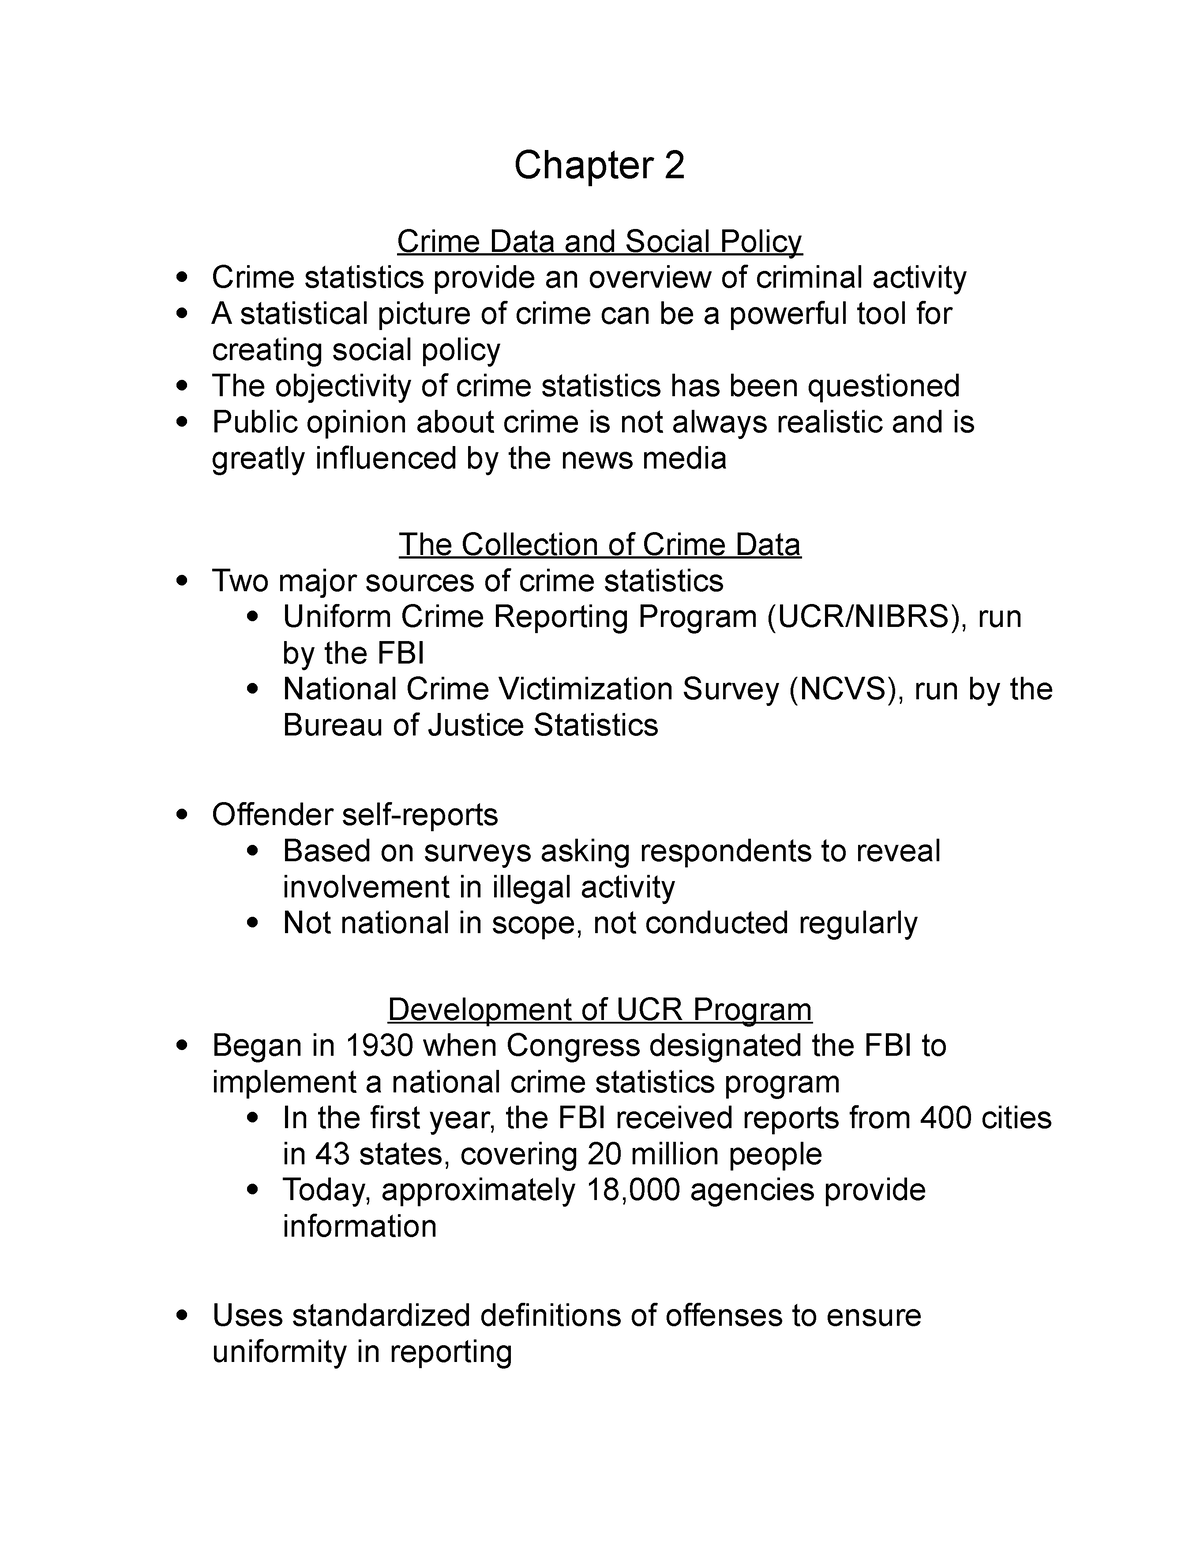 crime statistics research paper ideas